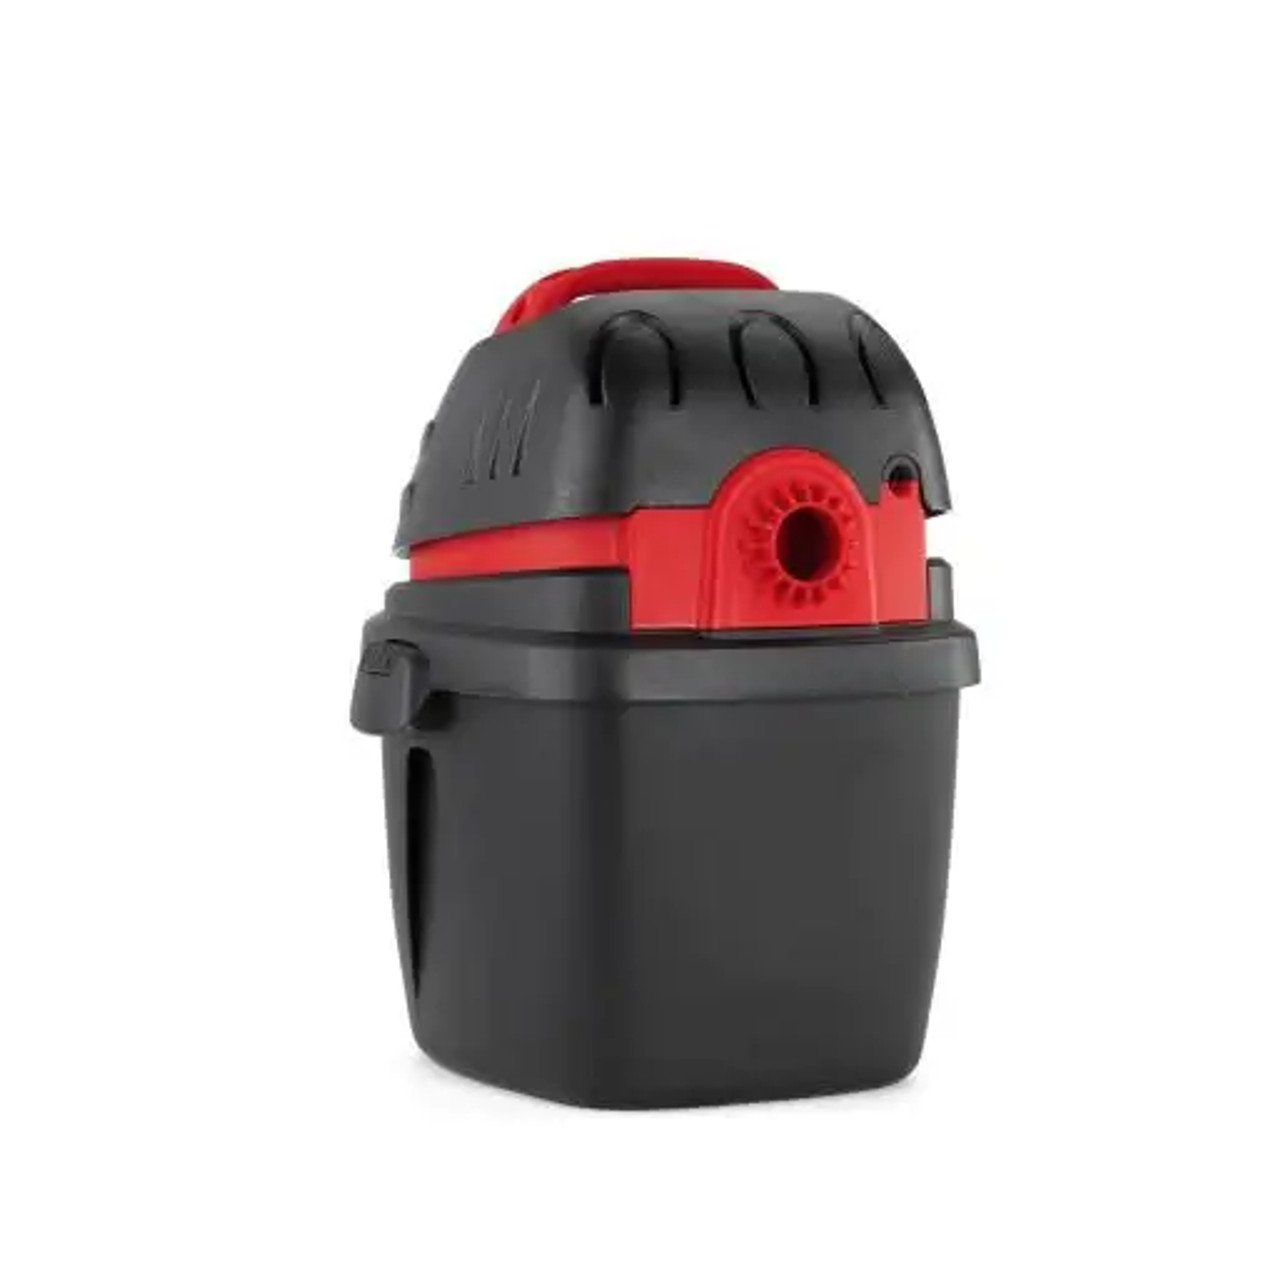 Shop-Vac 2.5 Gallon 2.5 Peak HP Polyethylene Wet Dry Vacuum with Tool Kit